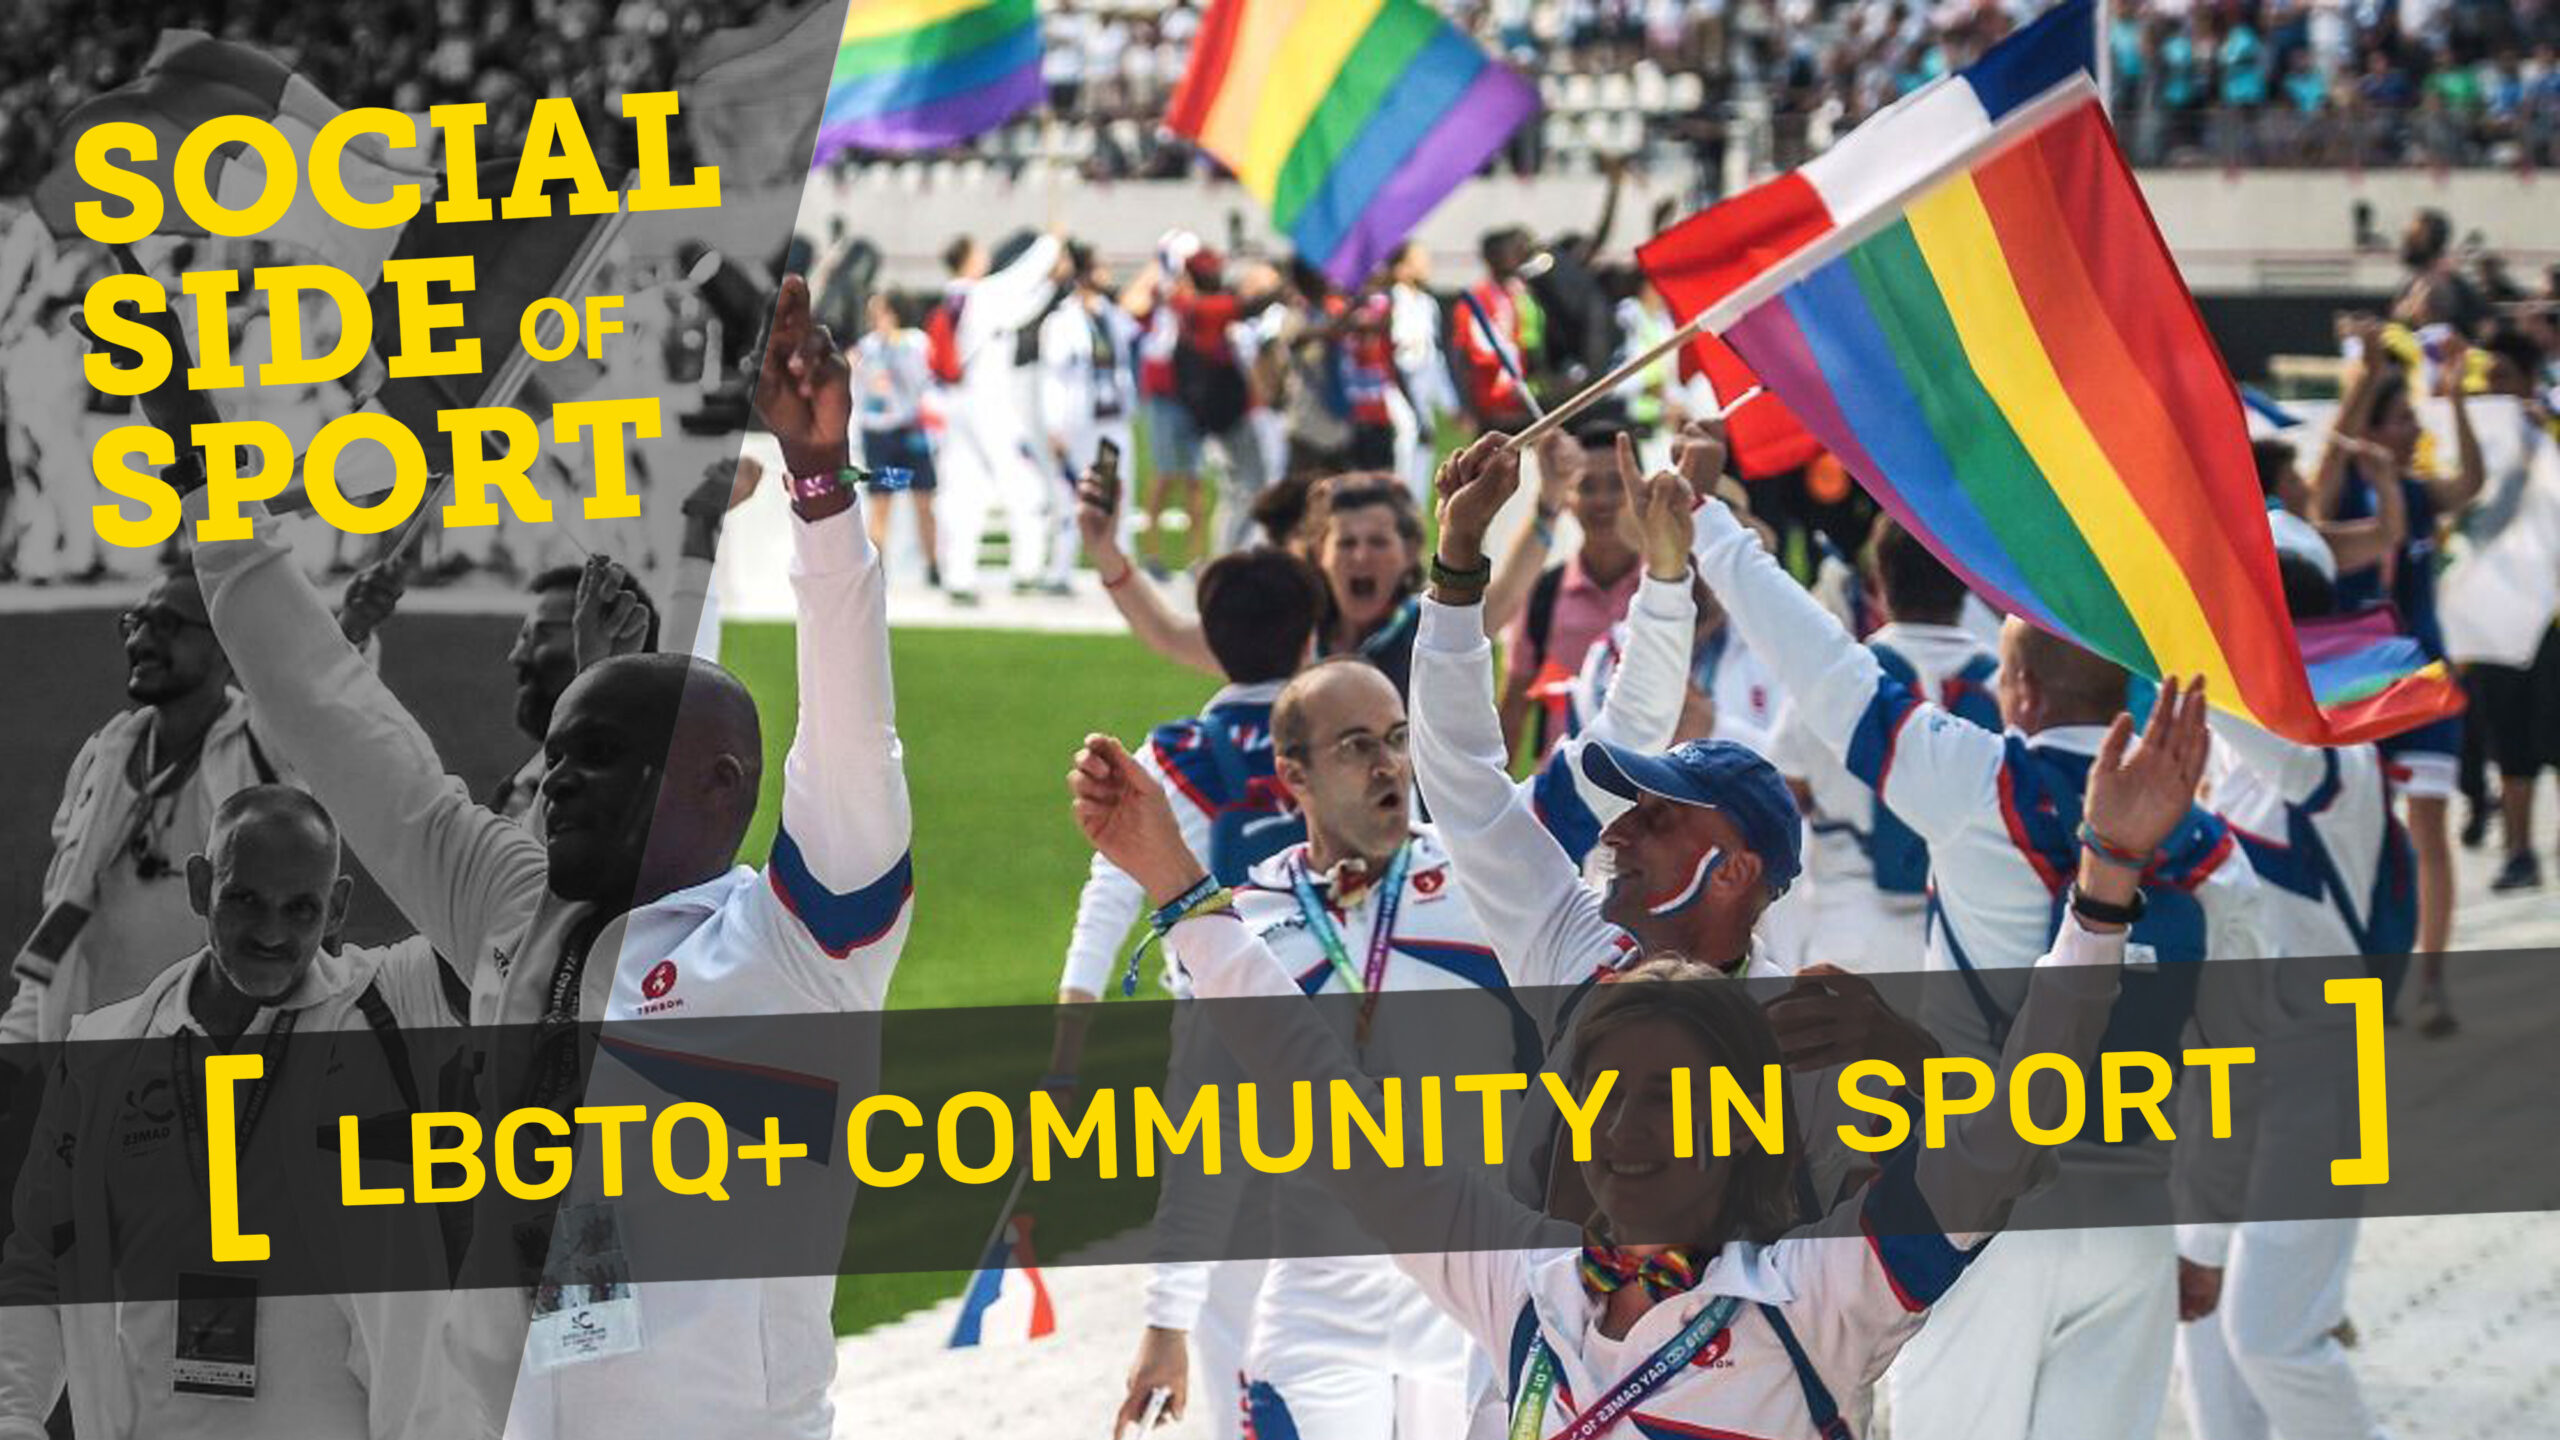 THE LGBTQ+ COMMUNITY IN SPORT | Community